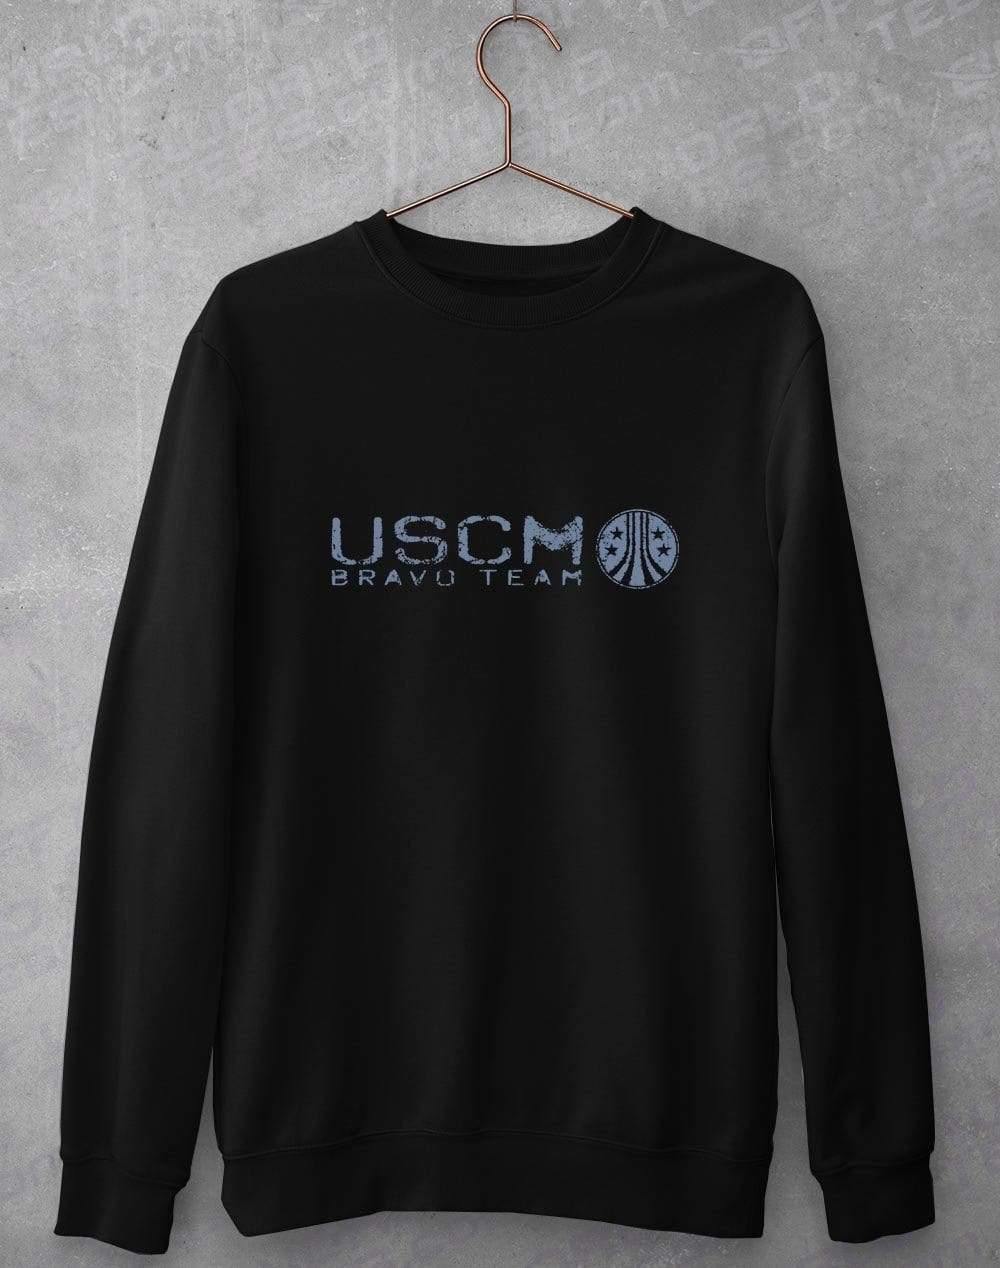 USCM United States Colonial Marines Sweatshirt S / Black  - Off World Tees